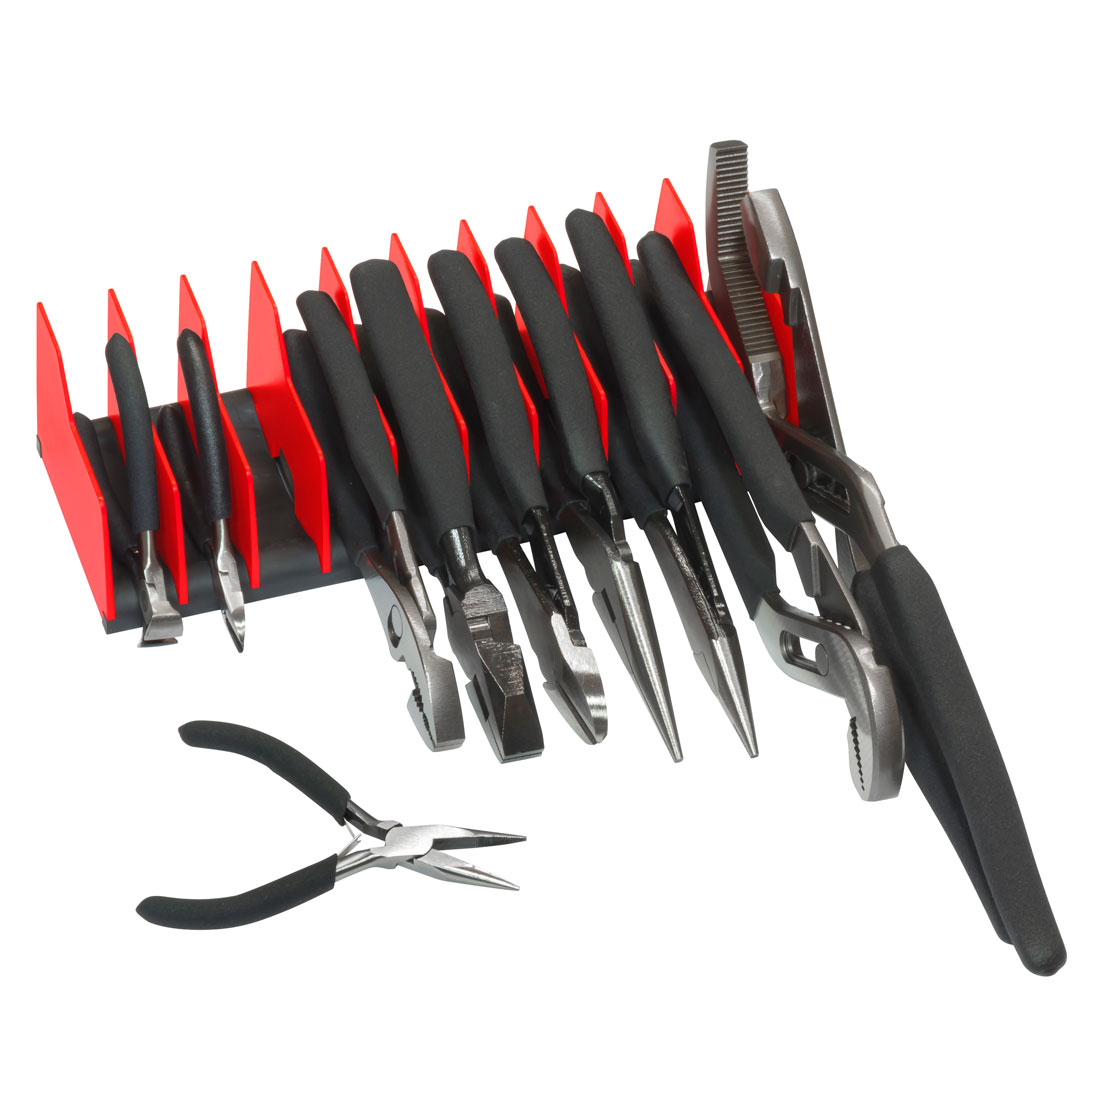 10 Tools Plier Organizer Durable & Long-Lasting Tool Storage - Hand Tools